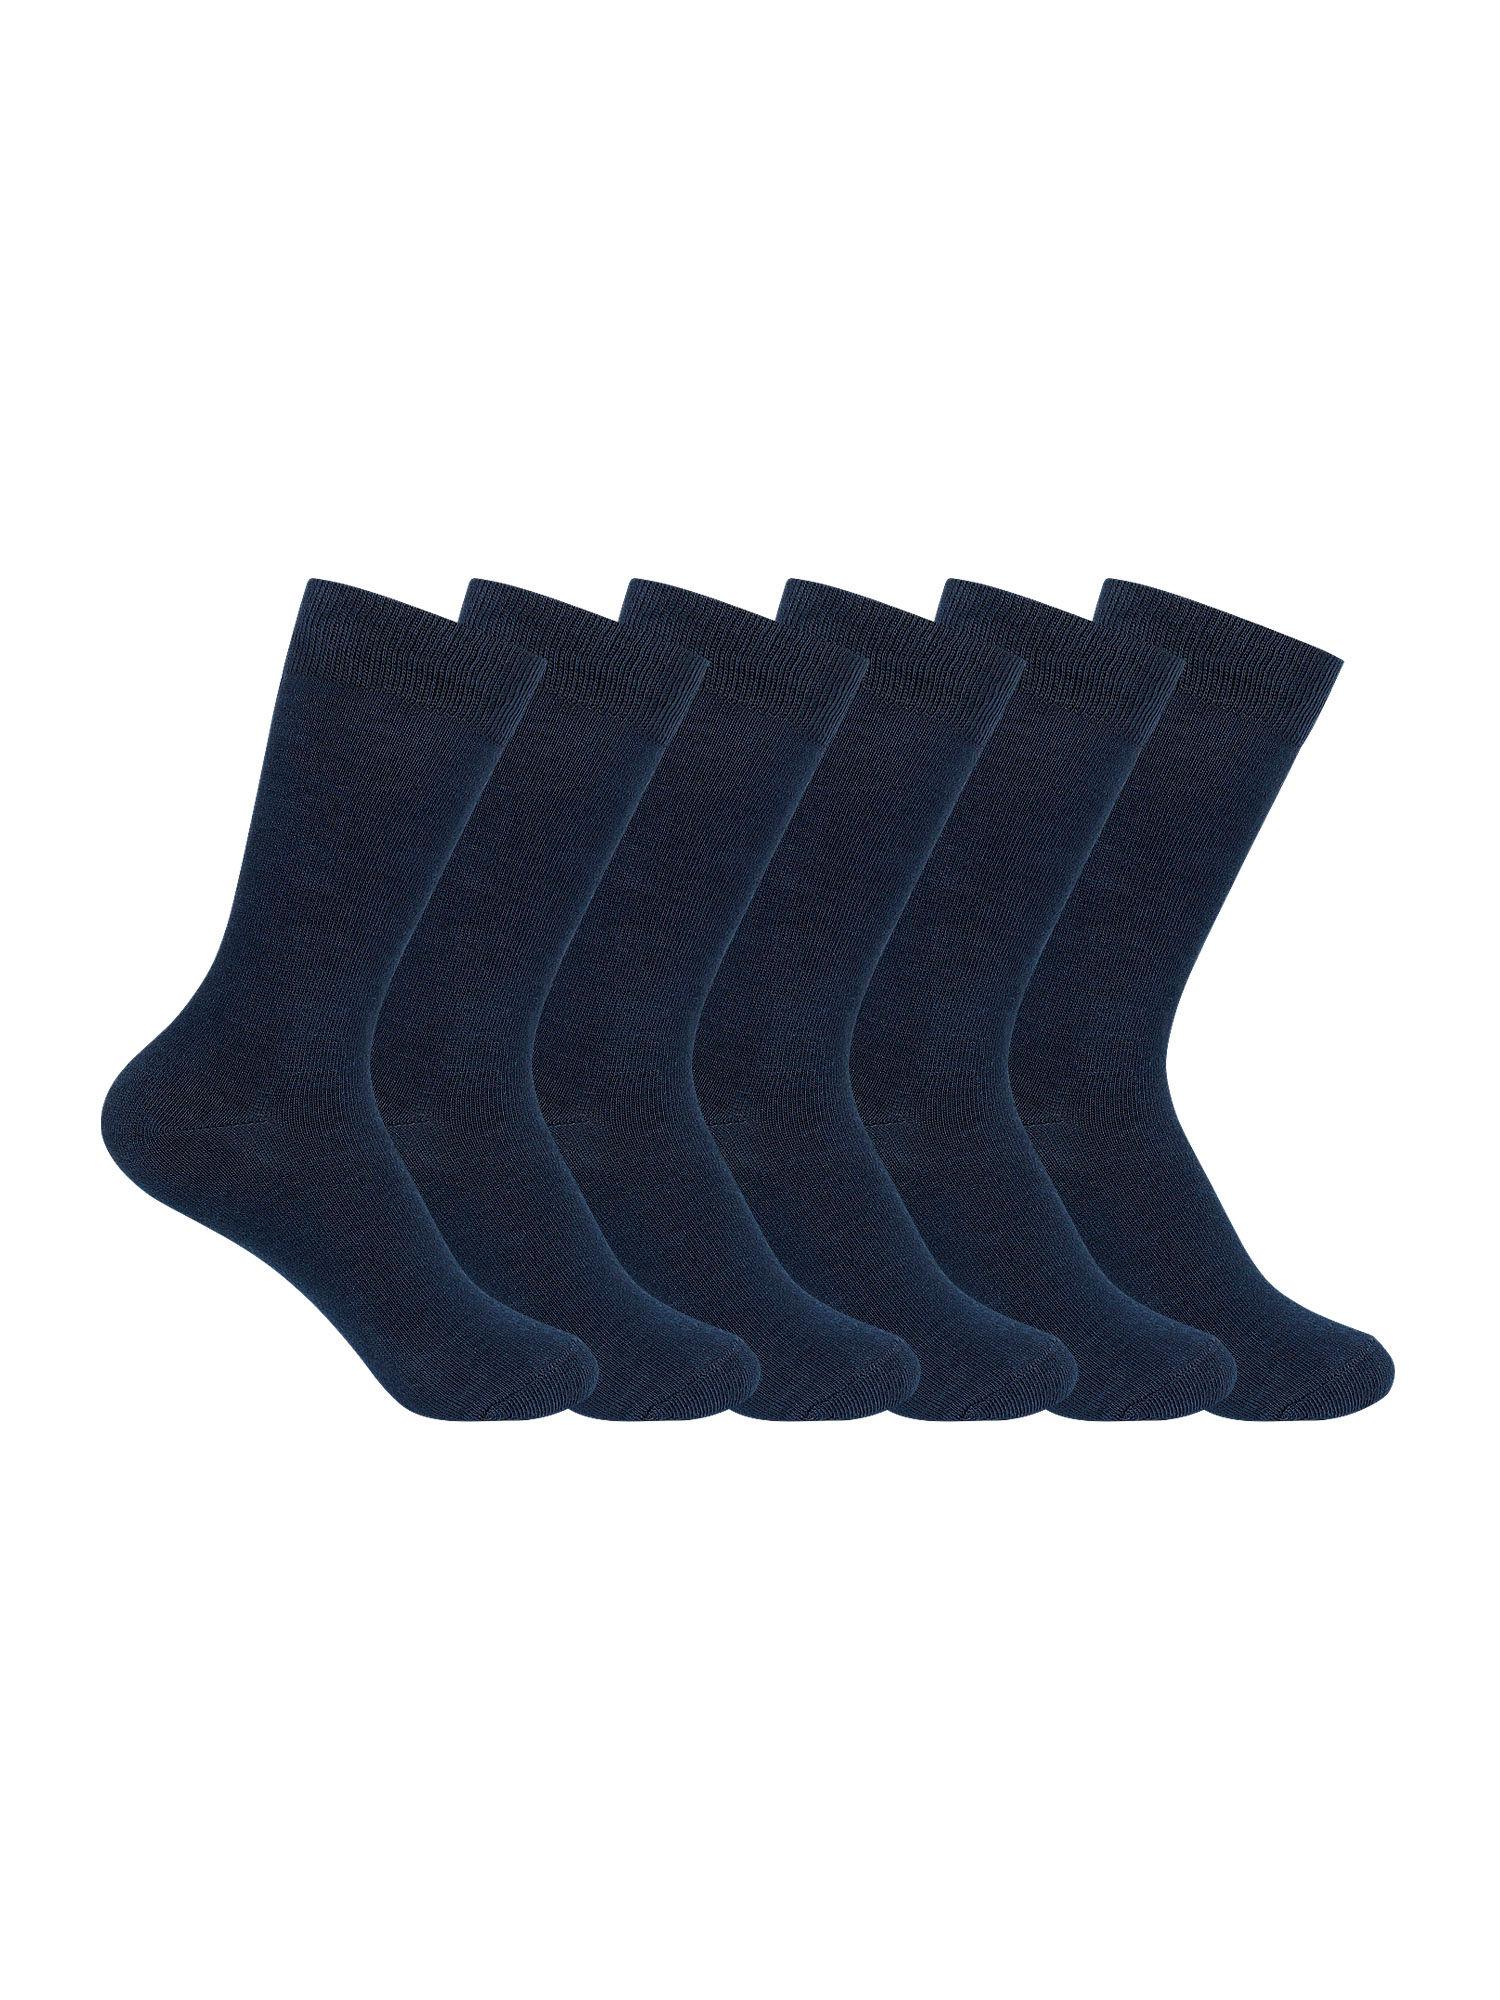 navy blue school uniform regular length combed cotton socks (pack of 6)